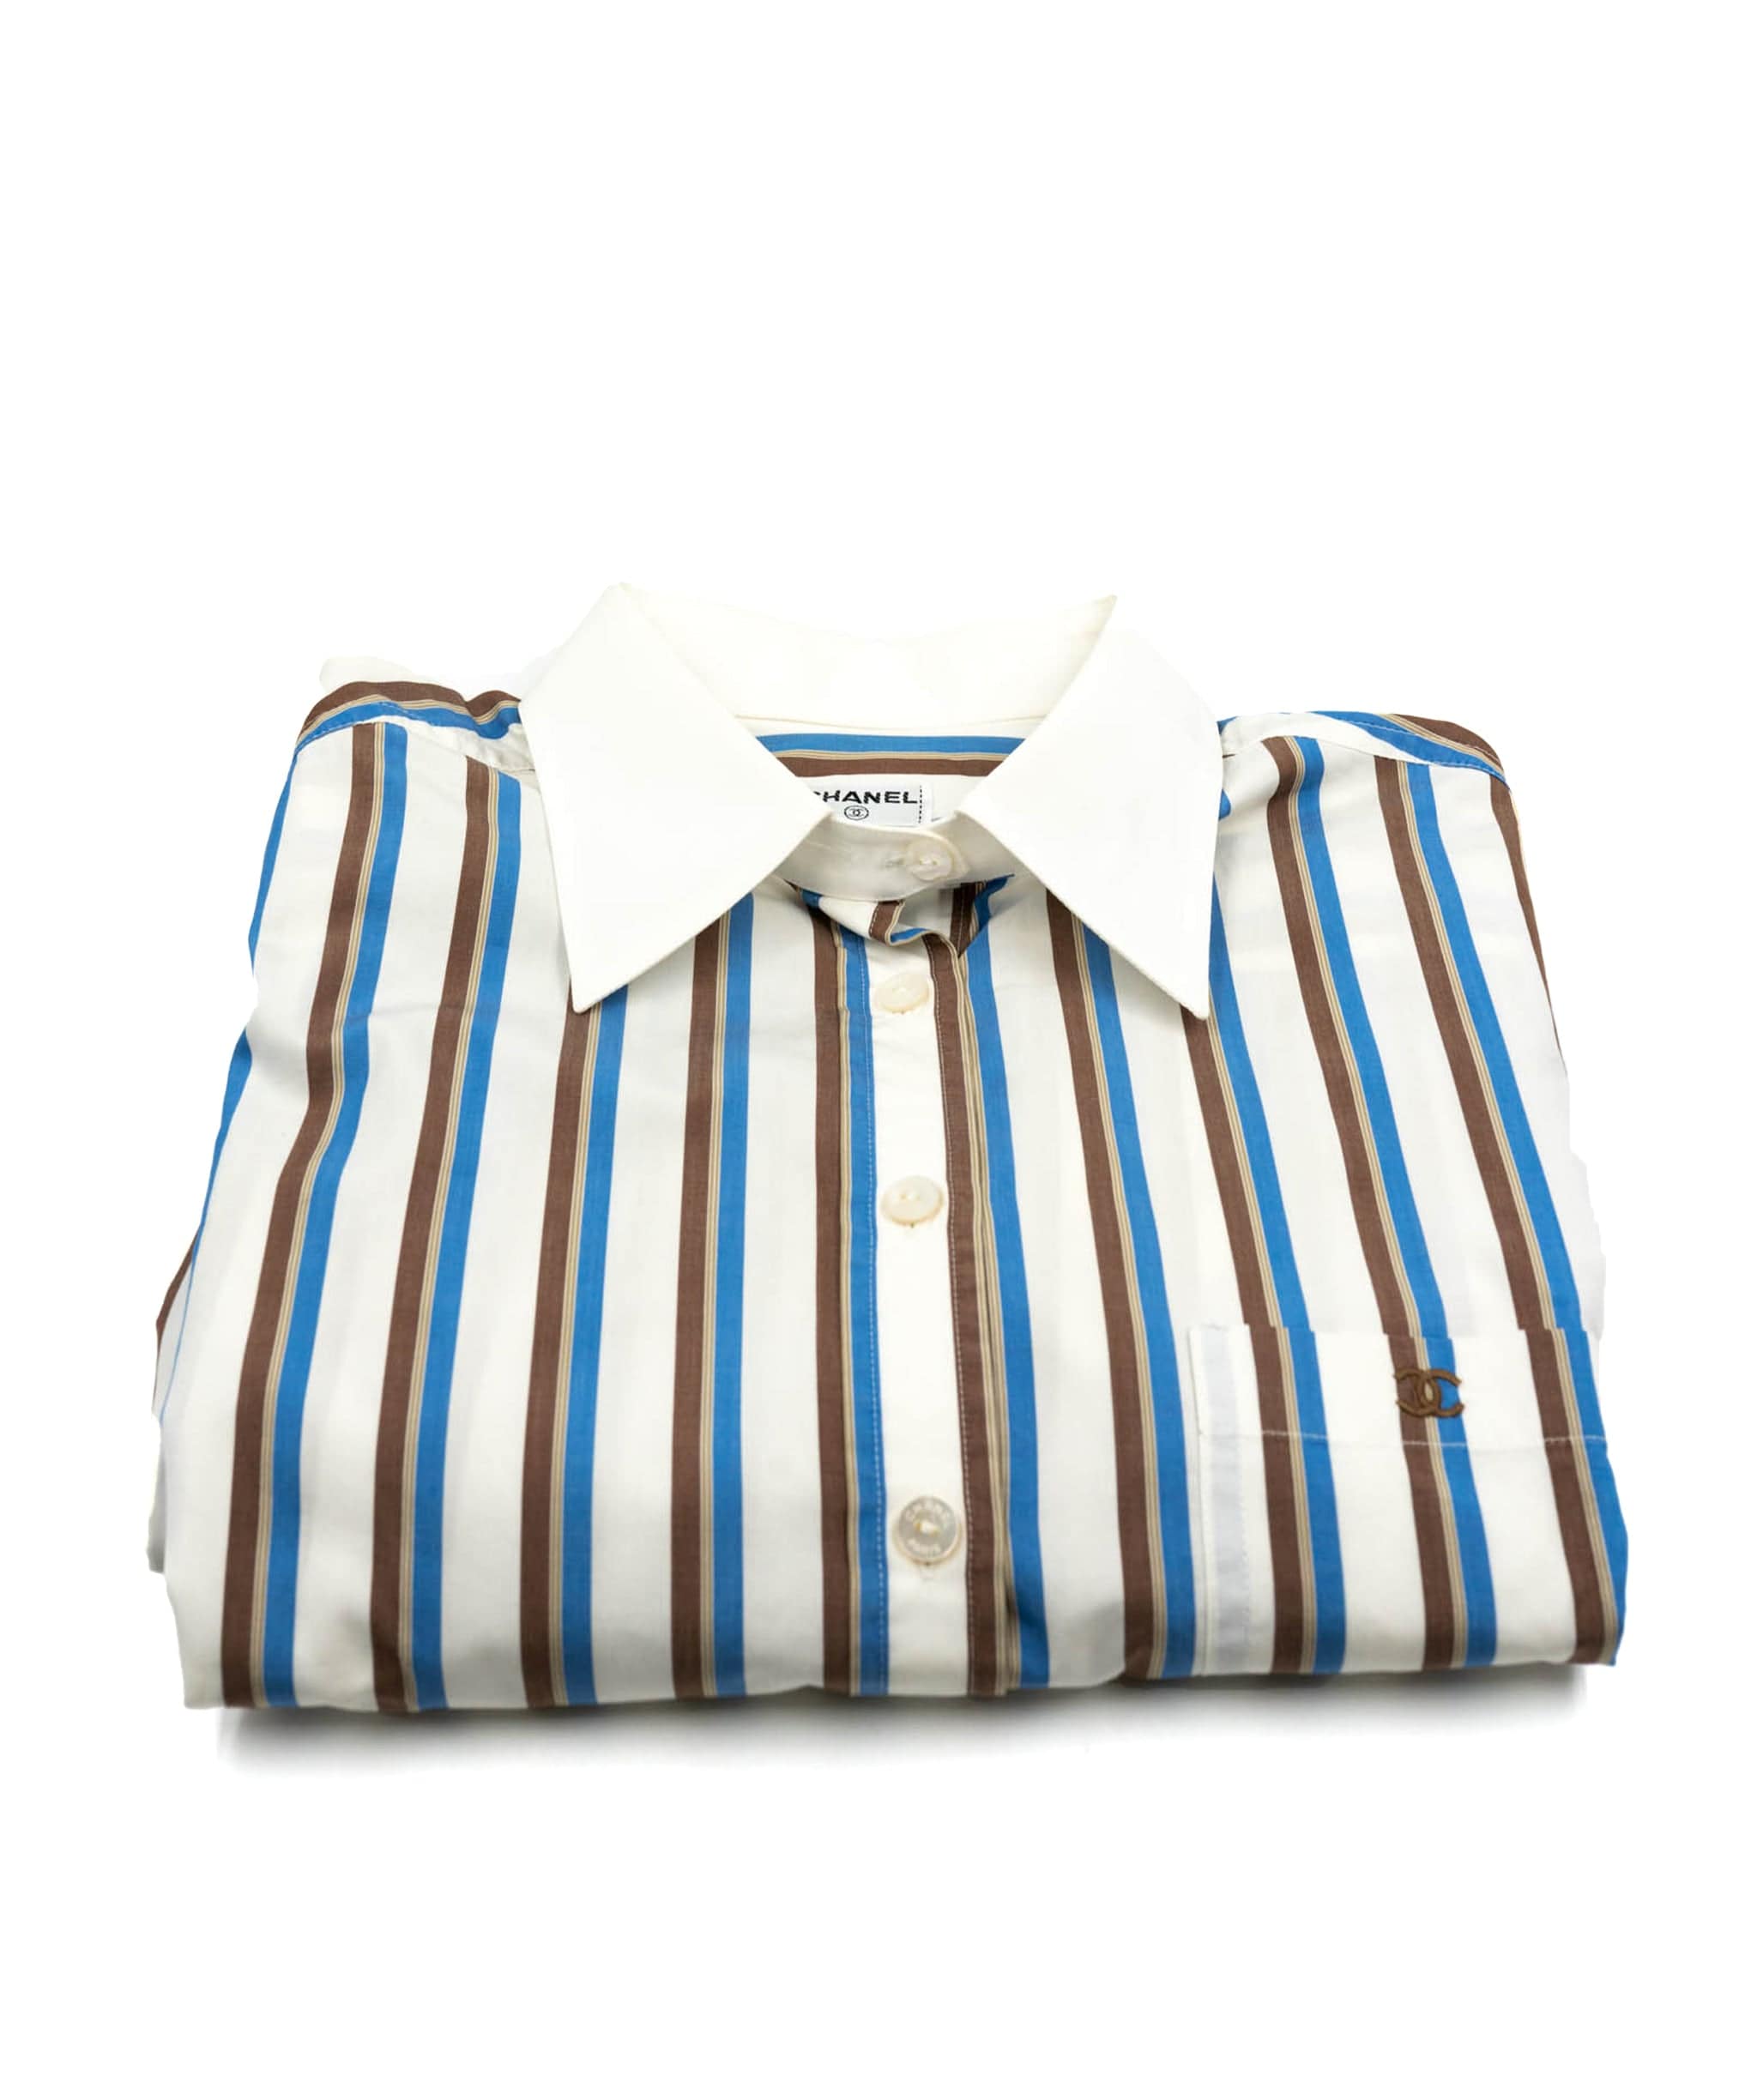 Chanel Chanel Stripe Button up Shirt Blue ASL4887